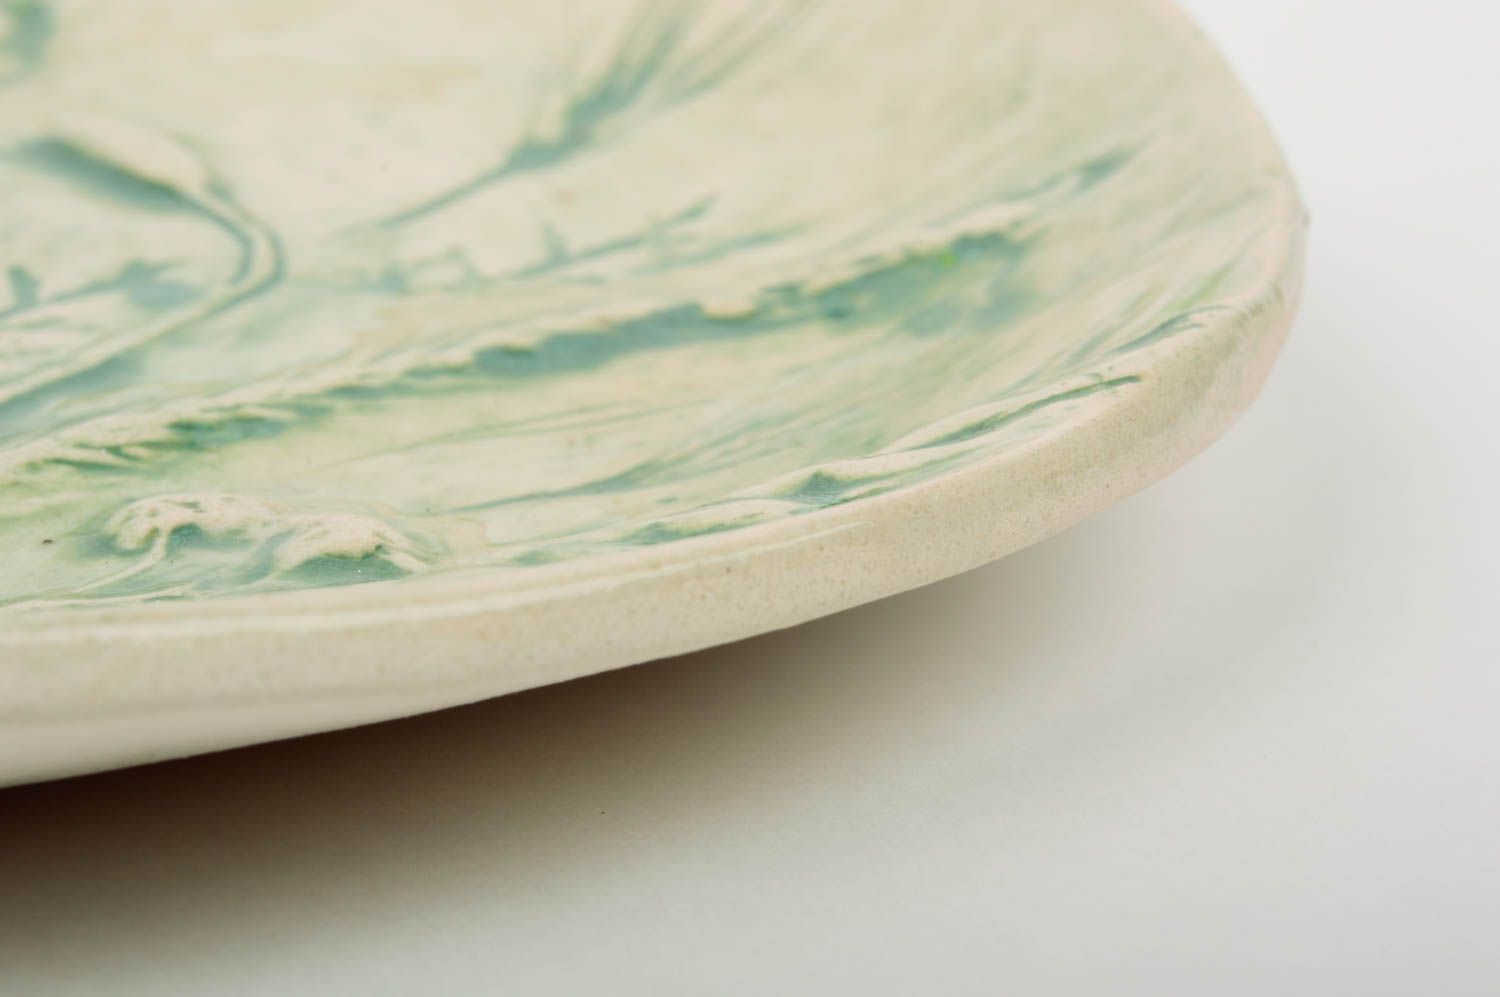 Handmade round clay plate painted ceramic plate decorative dishware ideas photo 5